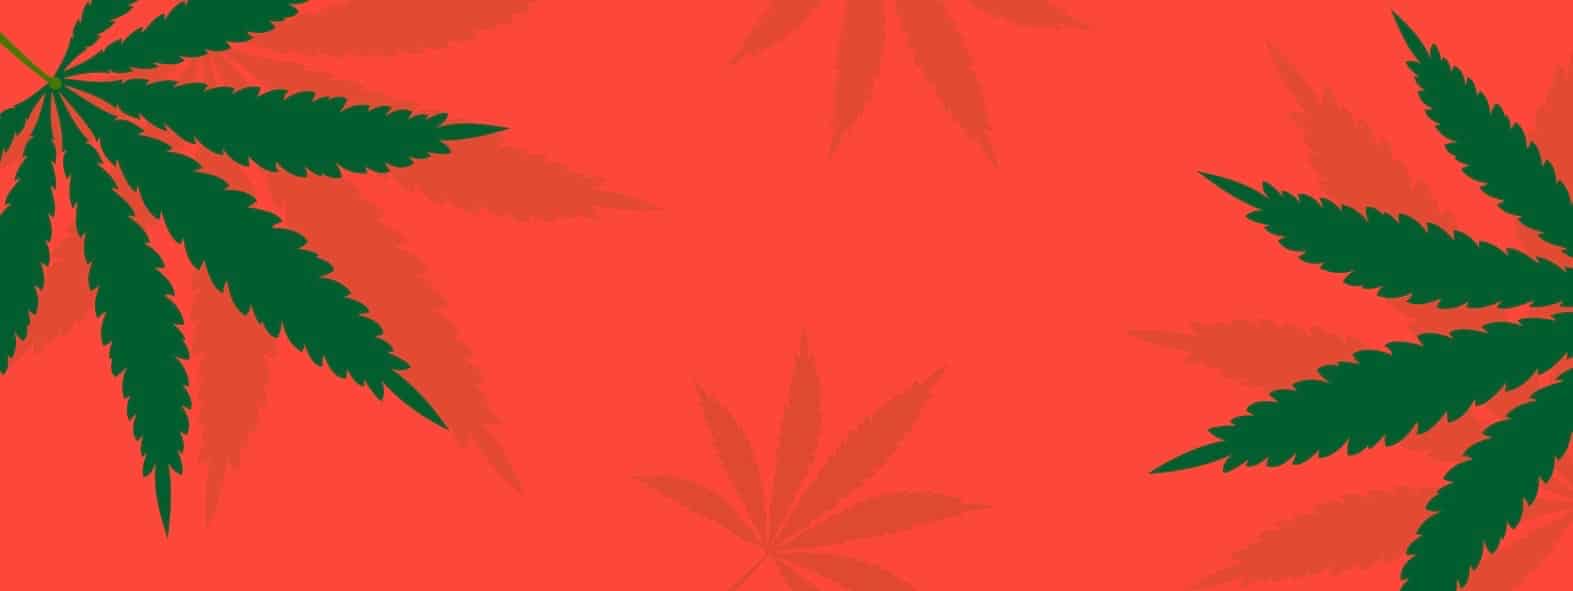 Cannabis leaves, marijuana plants concept